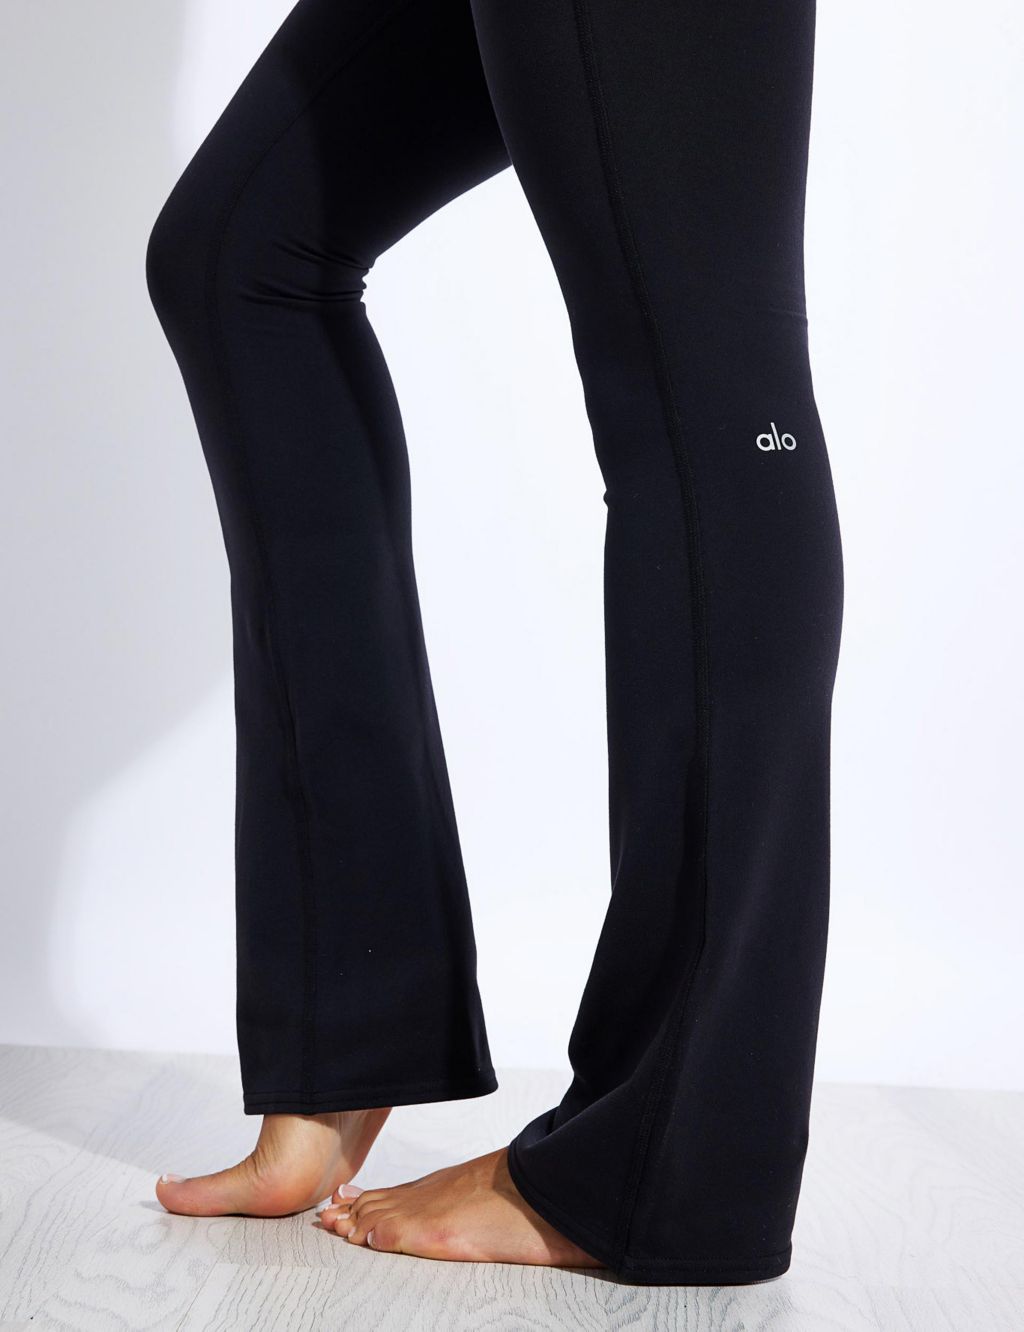 Airbrush high-rise bootcut pants in black - Alo Yoga